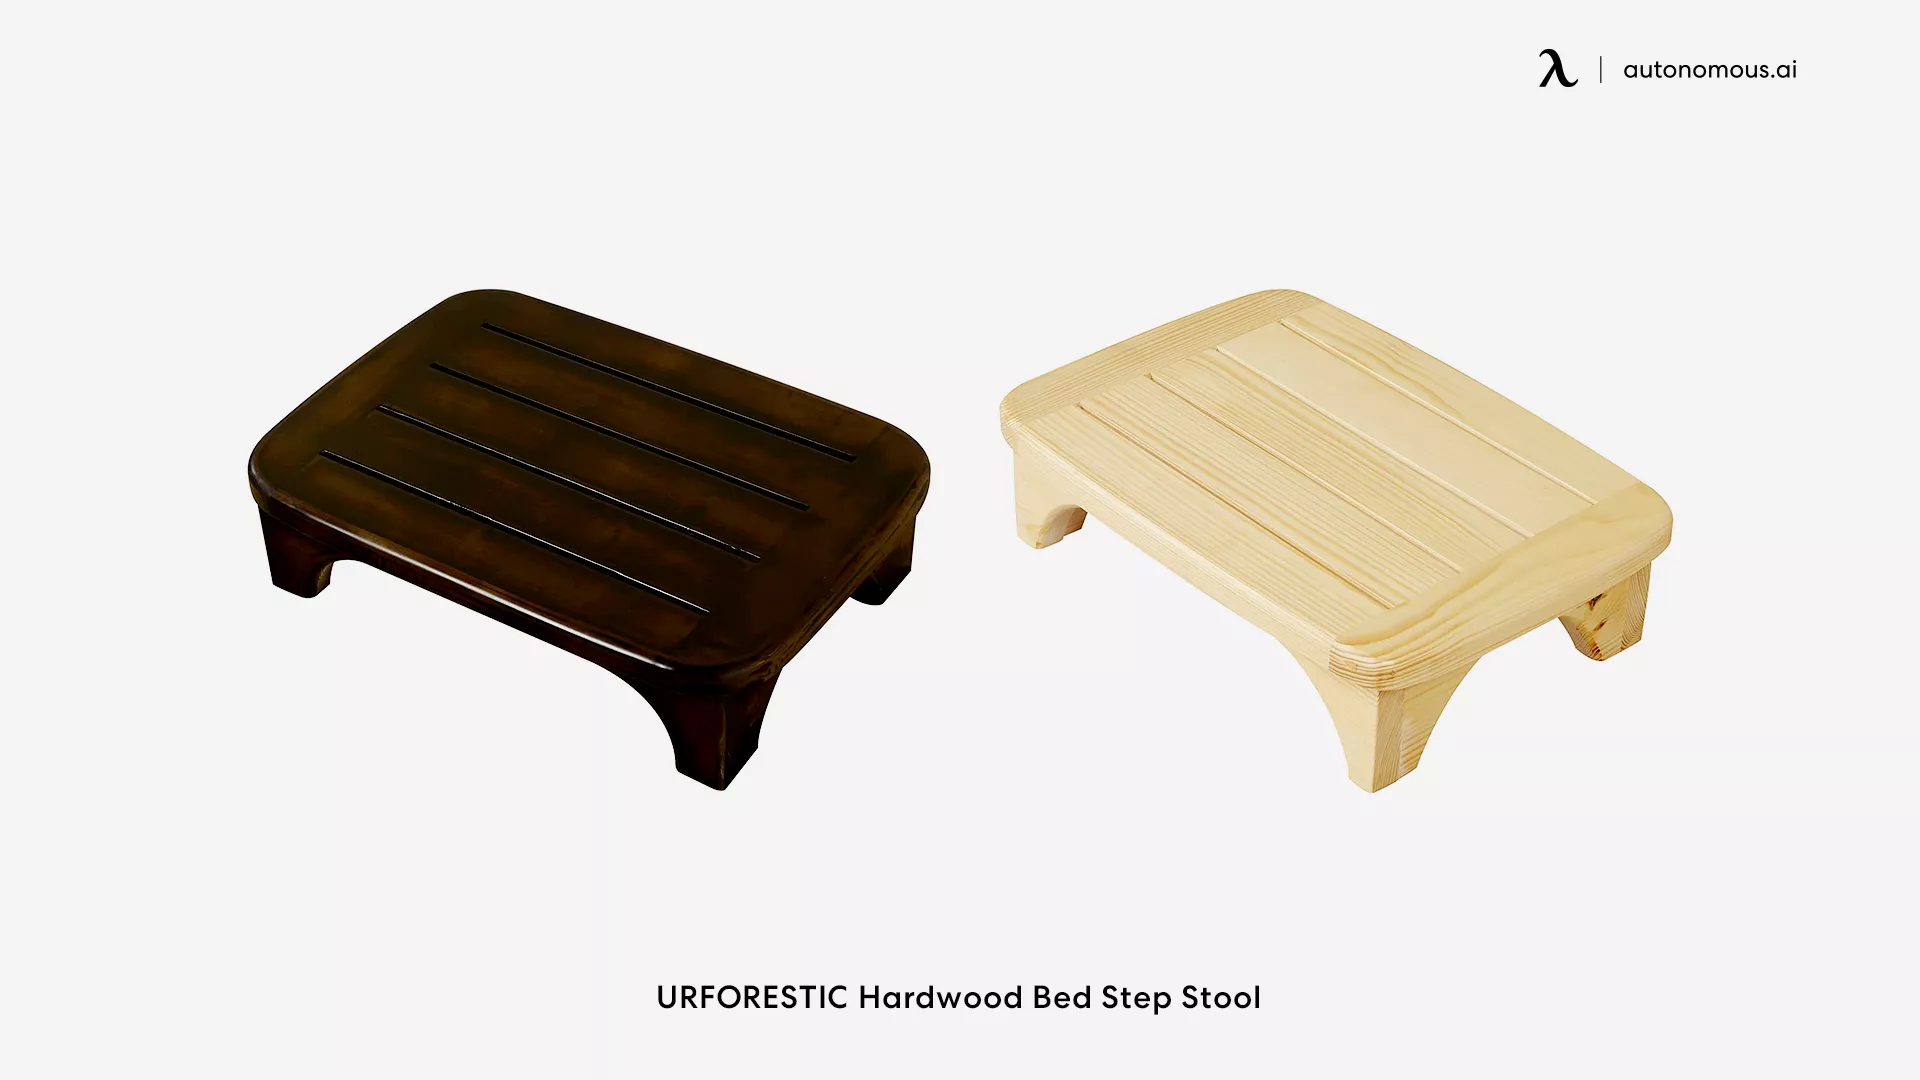 Step-stool in floor desk setup